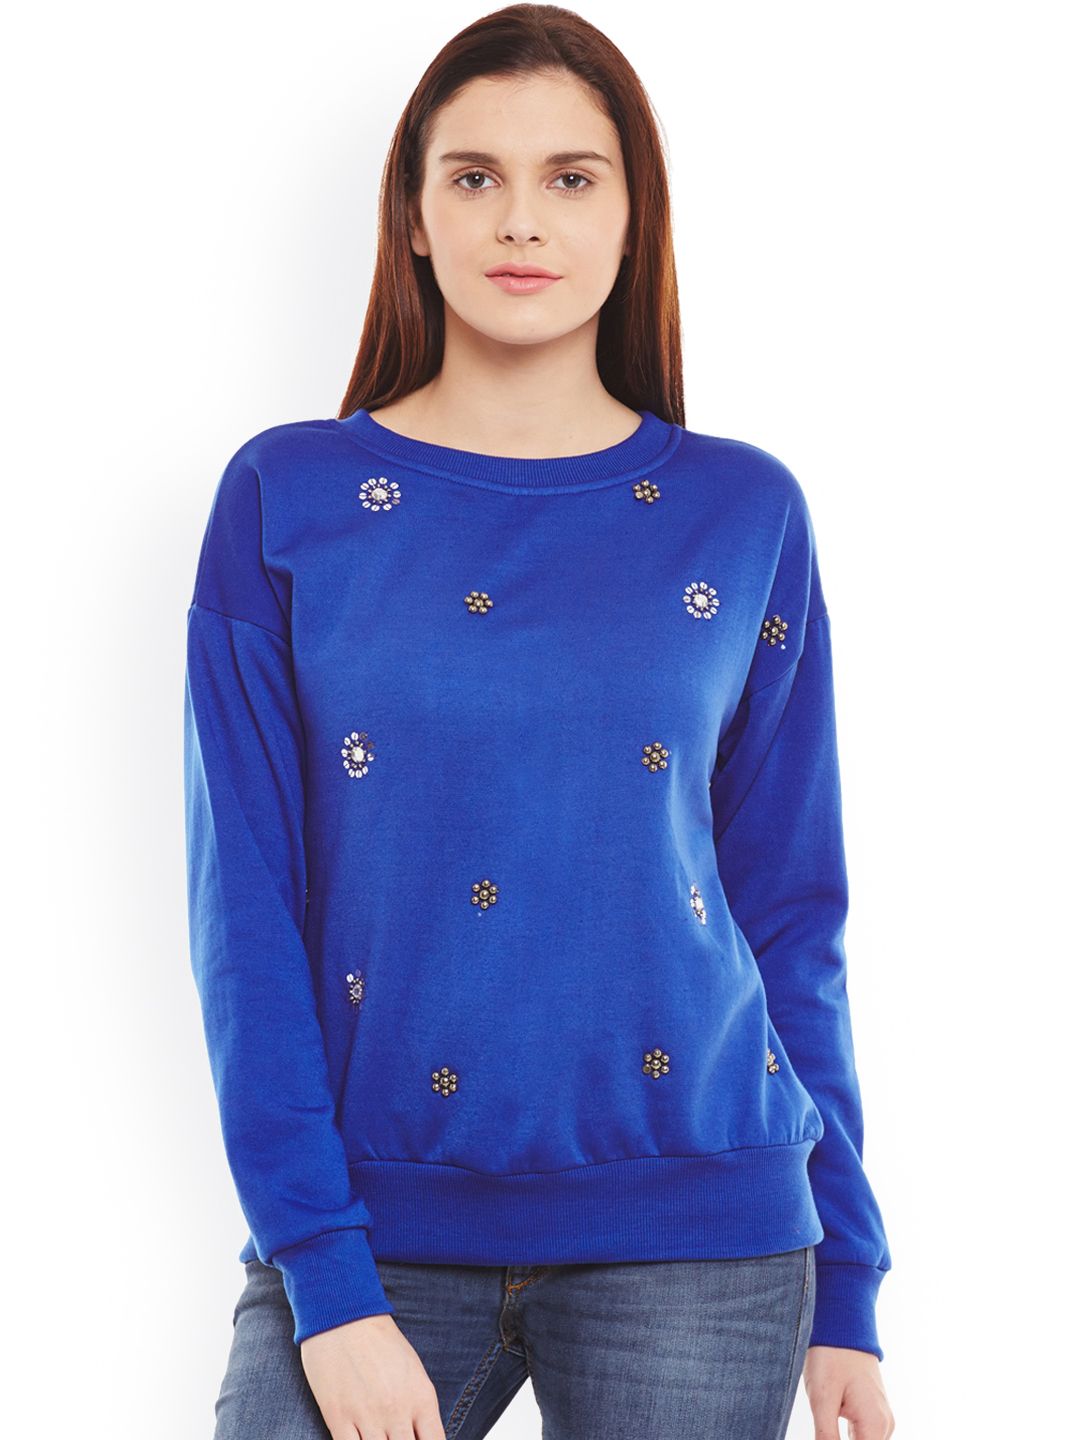 Belle Fille Blue Embellished Sweatshirt Price in India